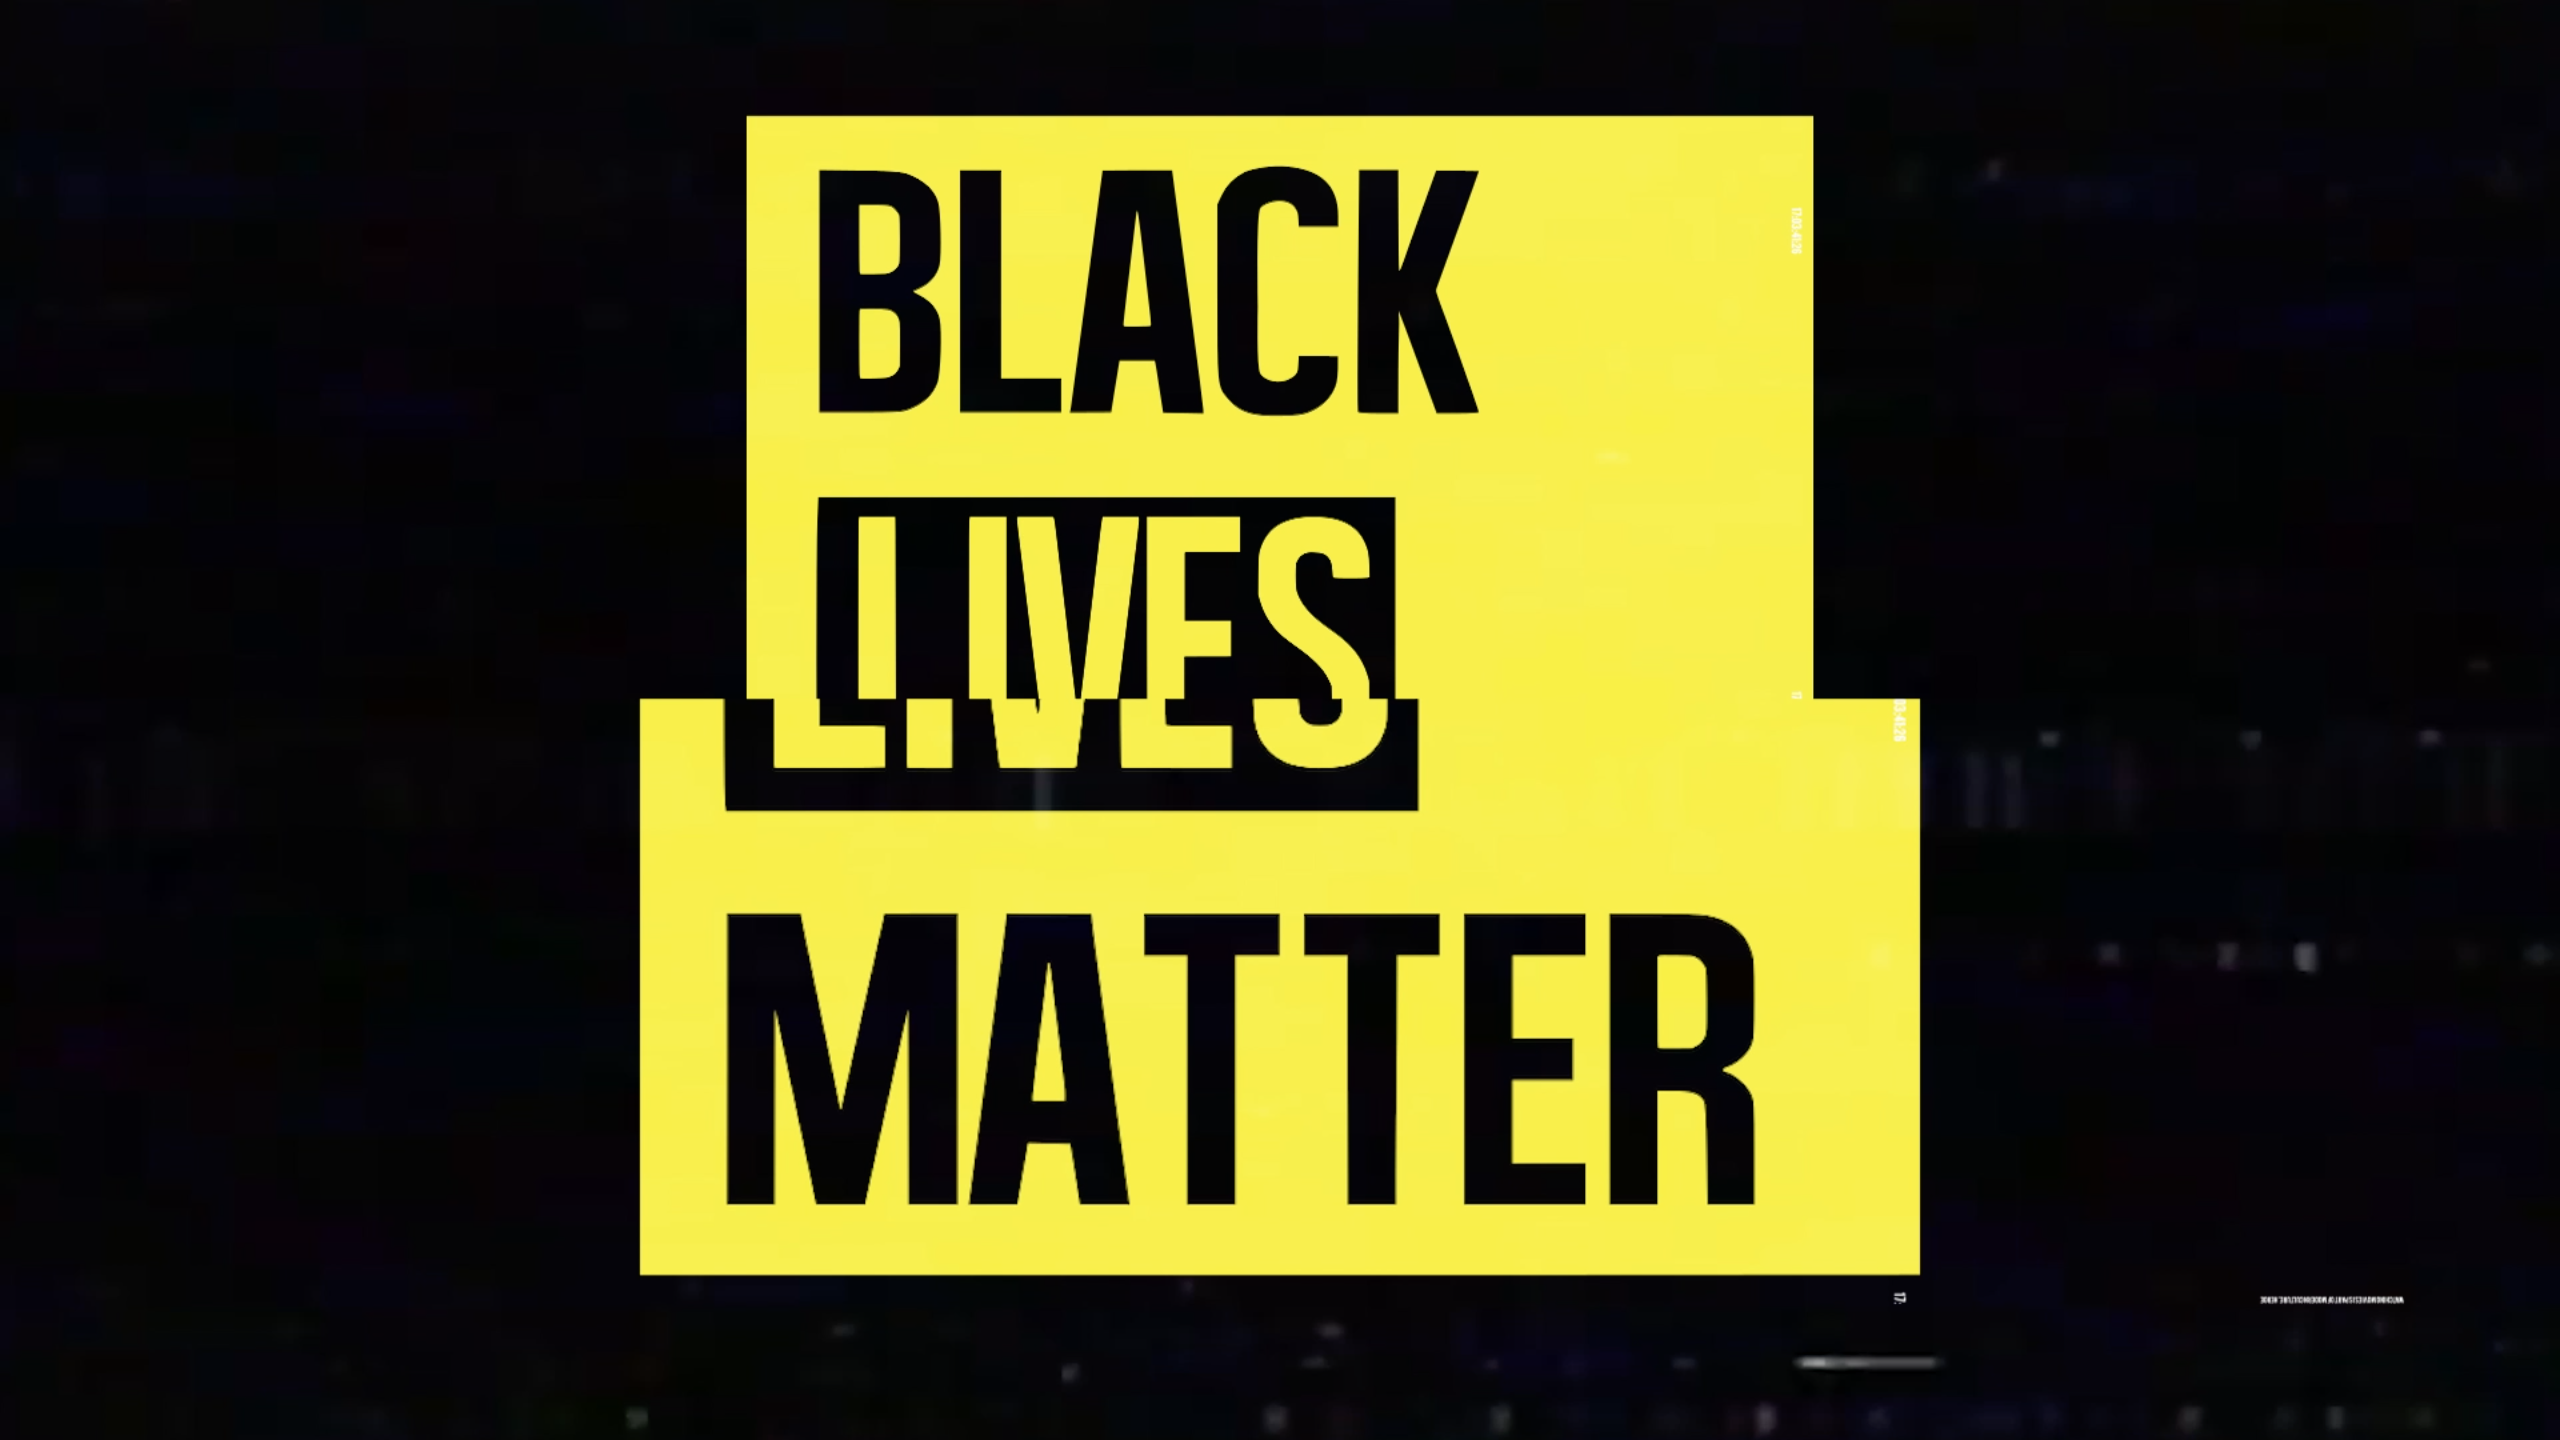 Who is Black Lives Matter